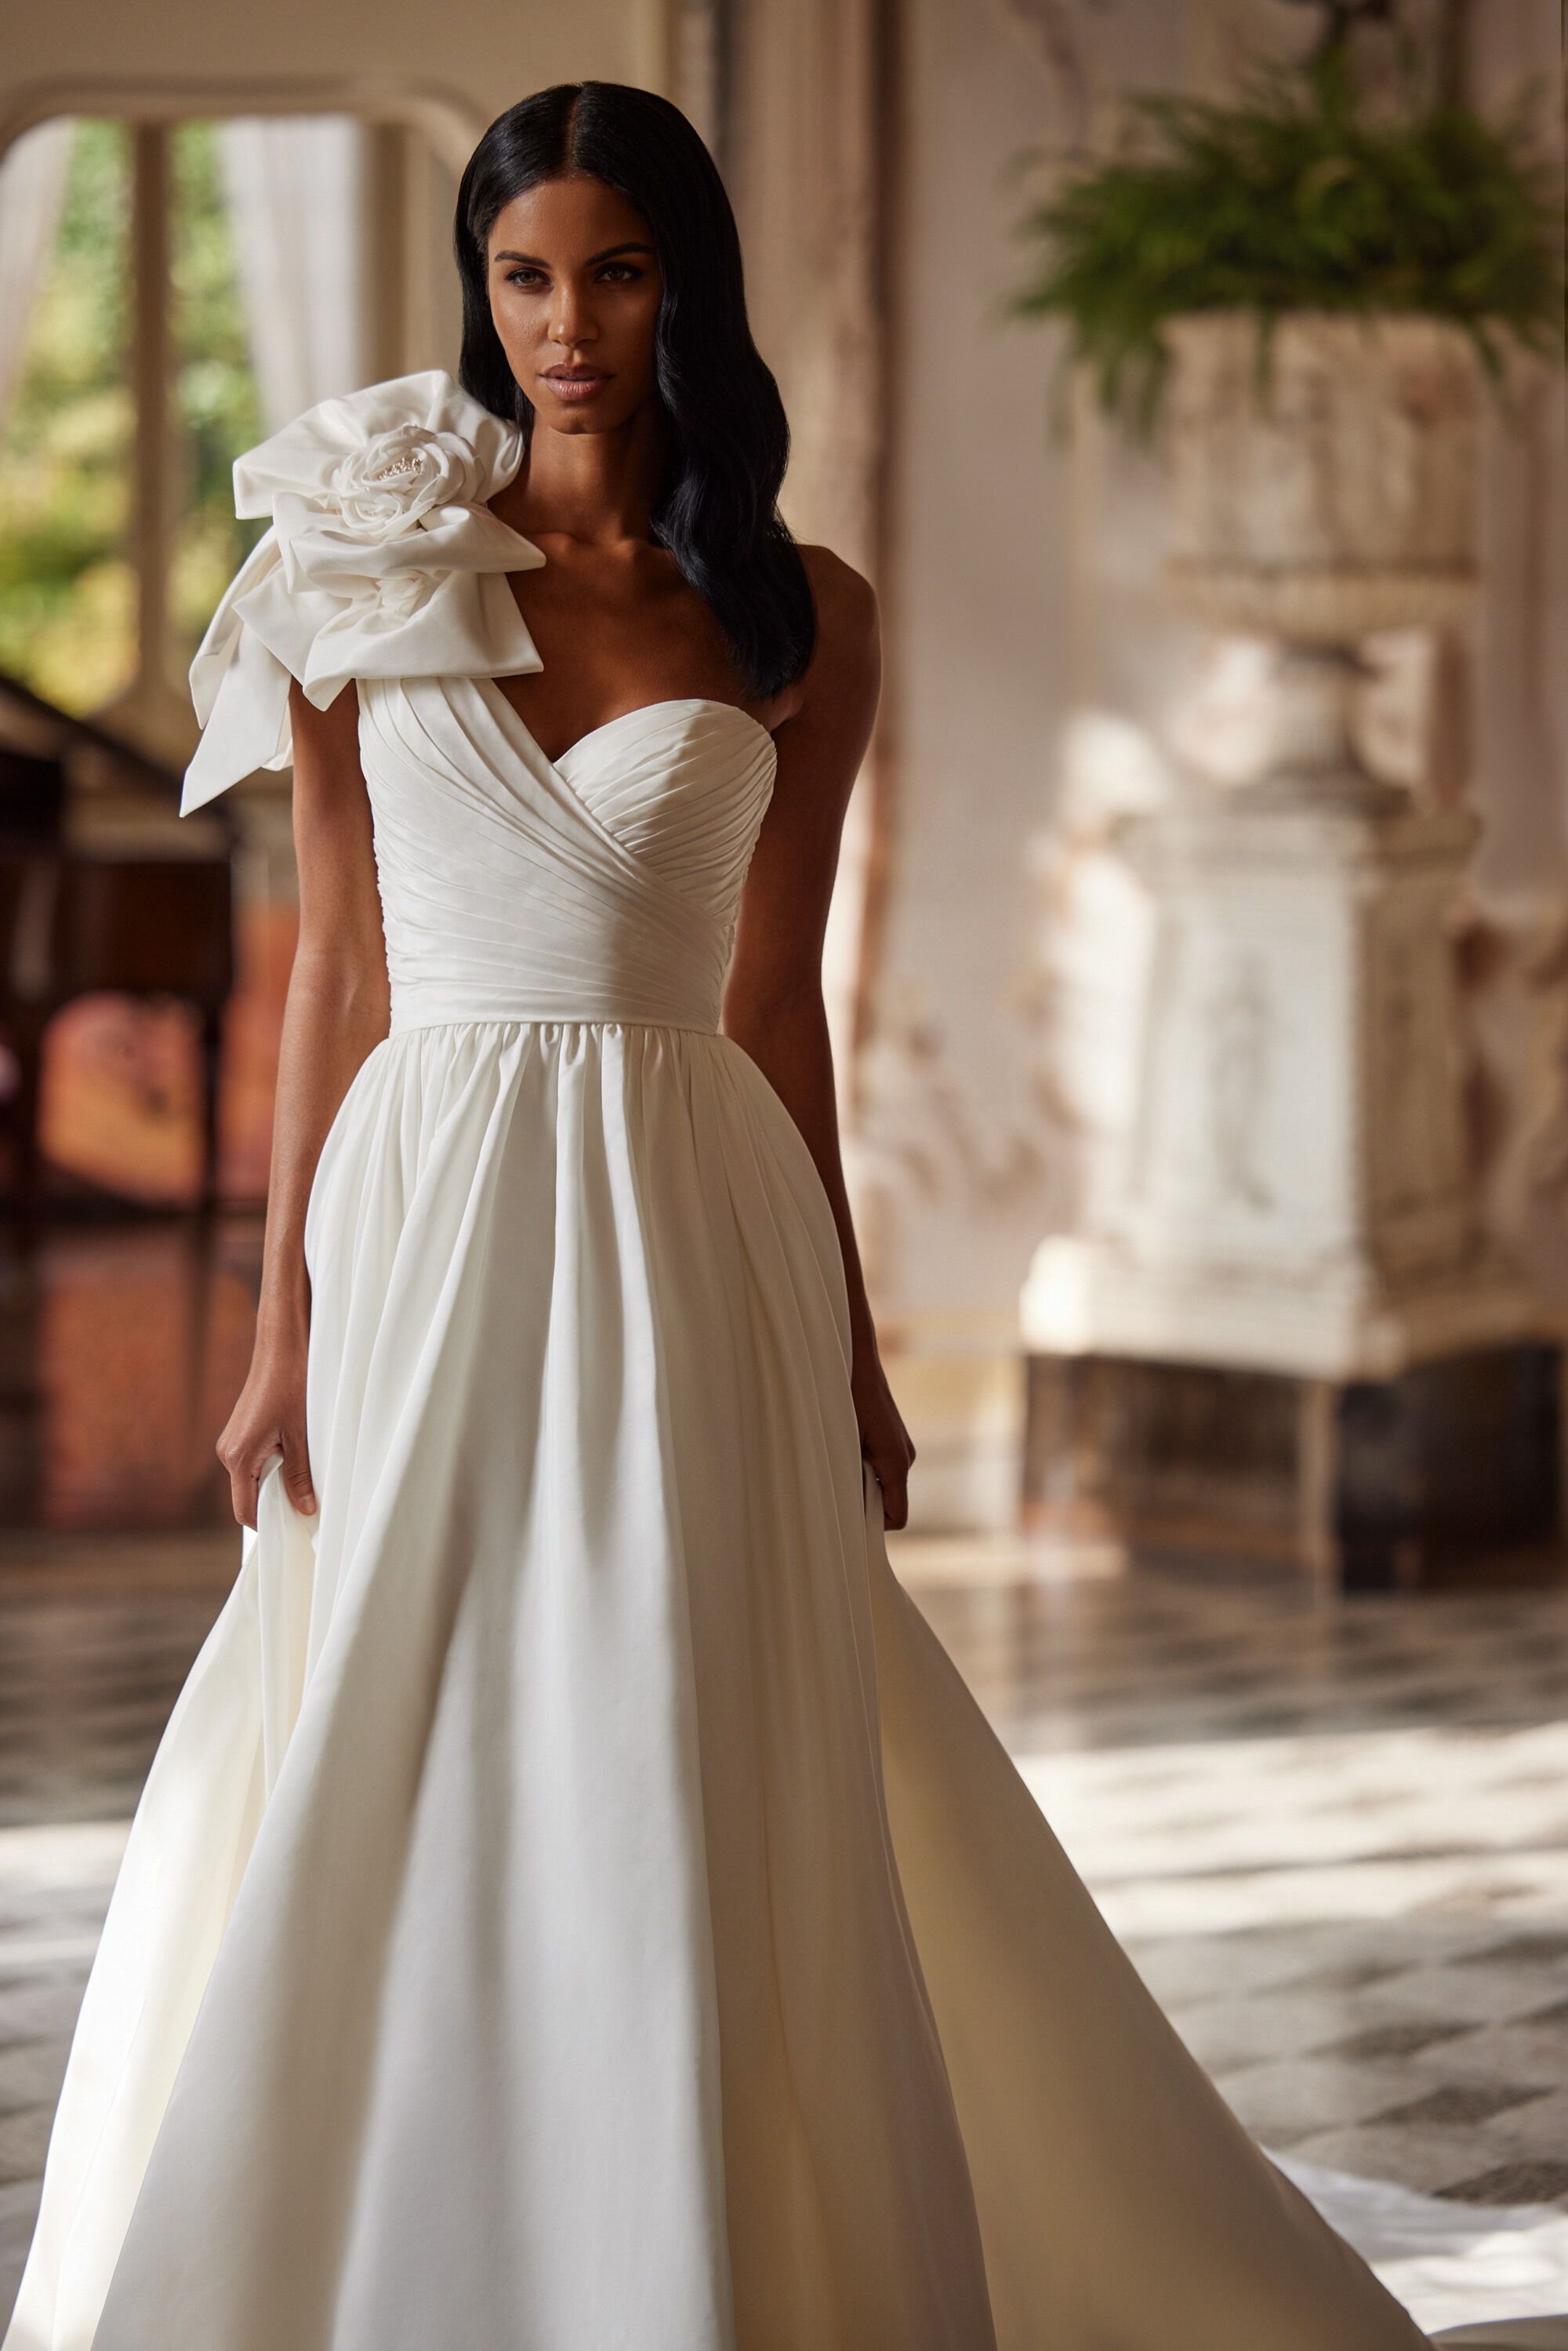 Wedding Dresses for a Modern Bride - Fashionably Yours Bridal & Formal Wear